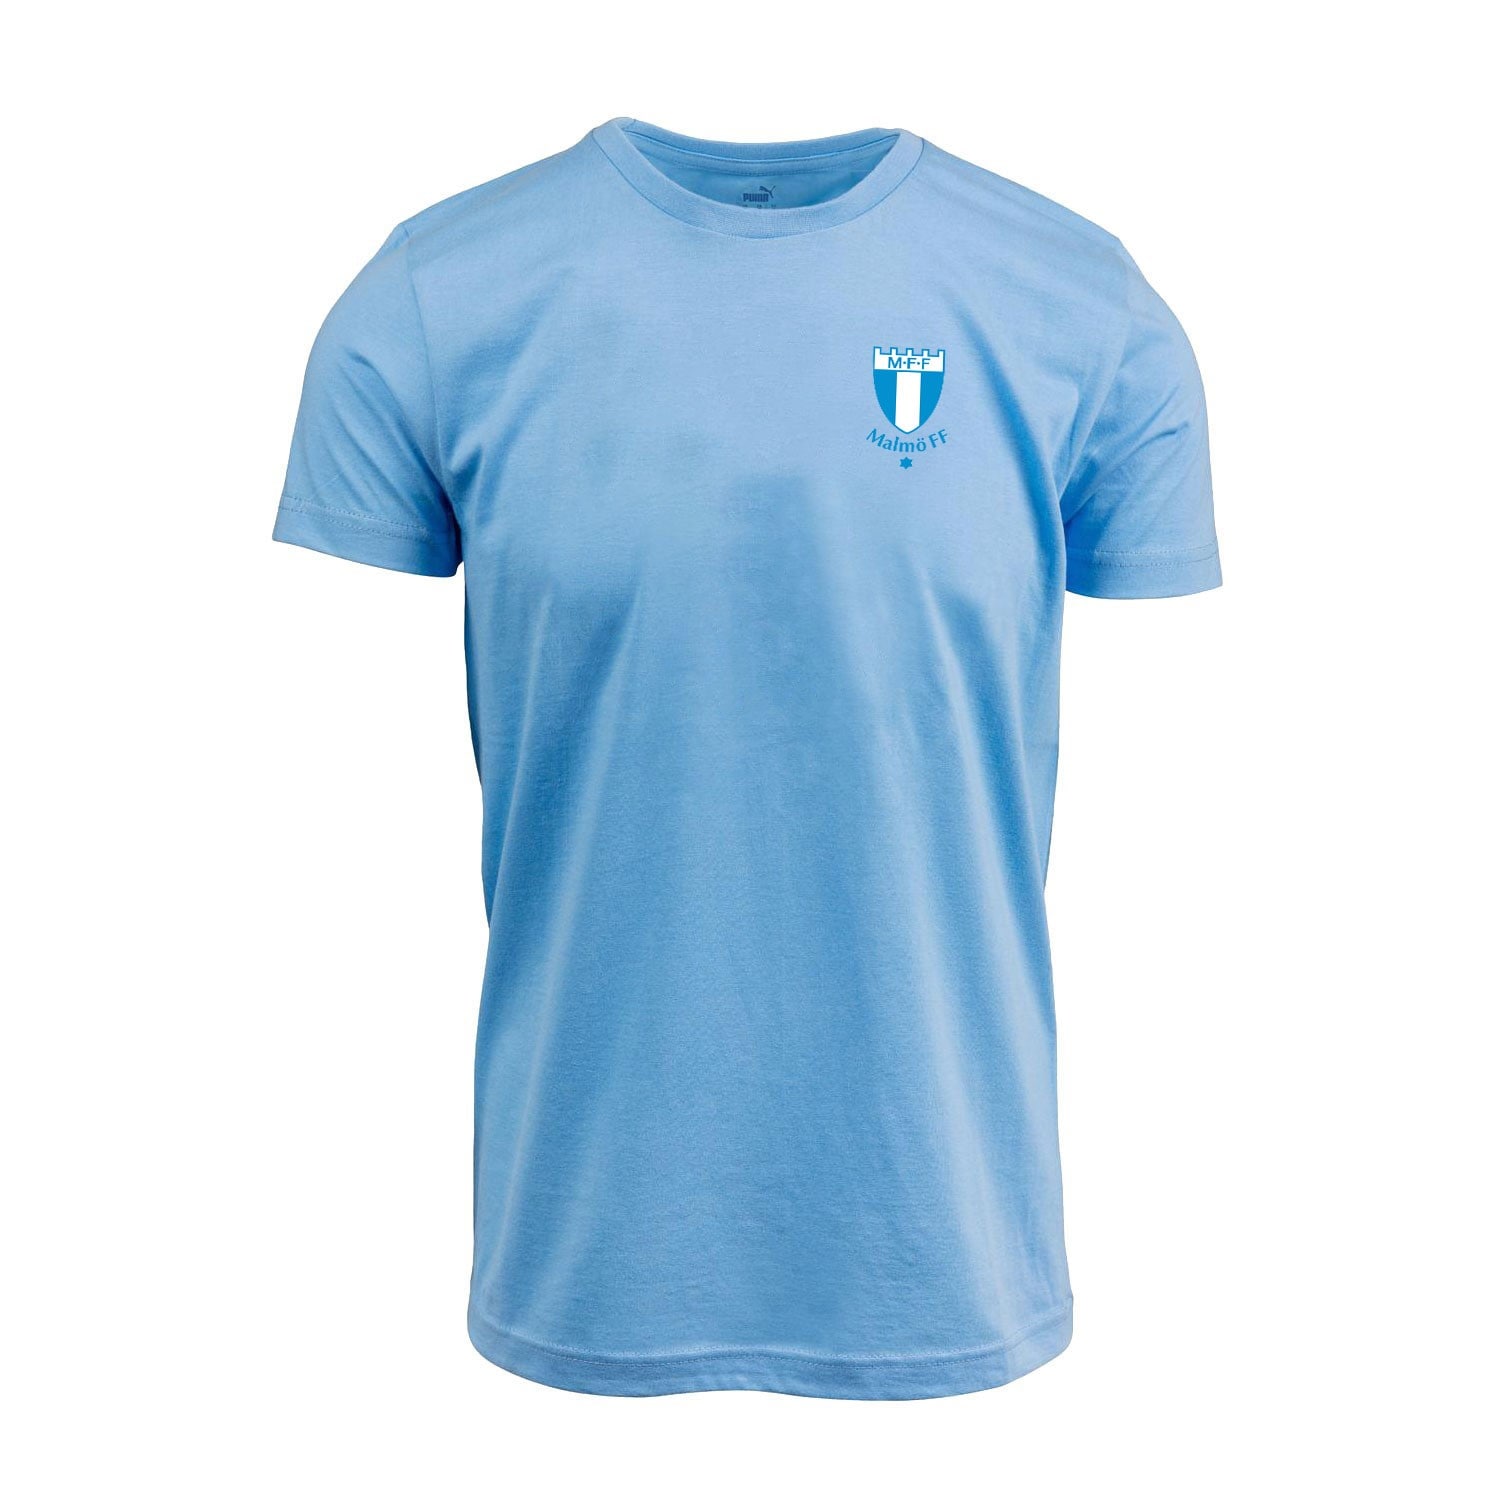 Puma t-shirt liten logo ljusblå